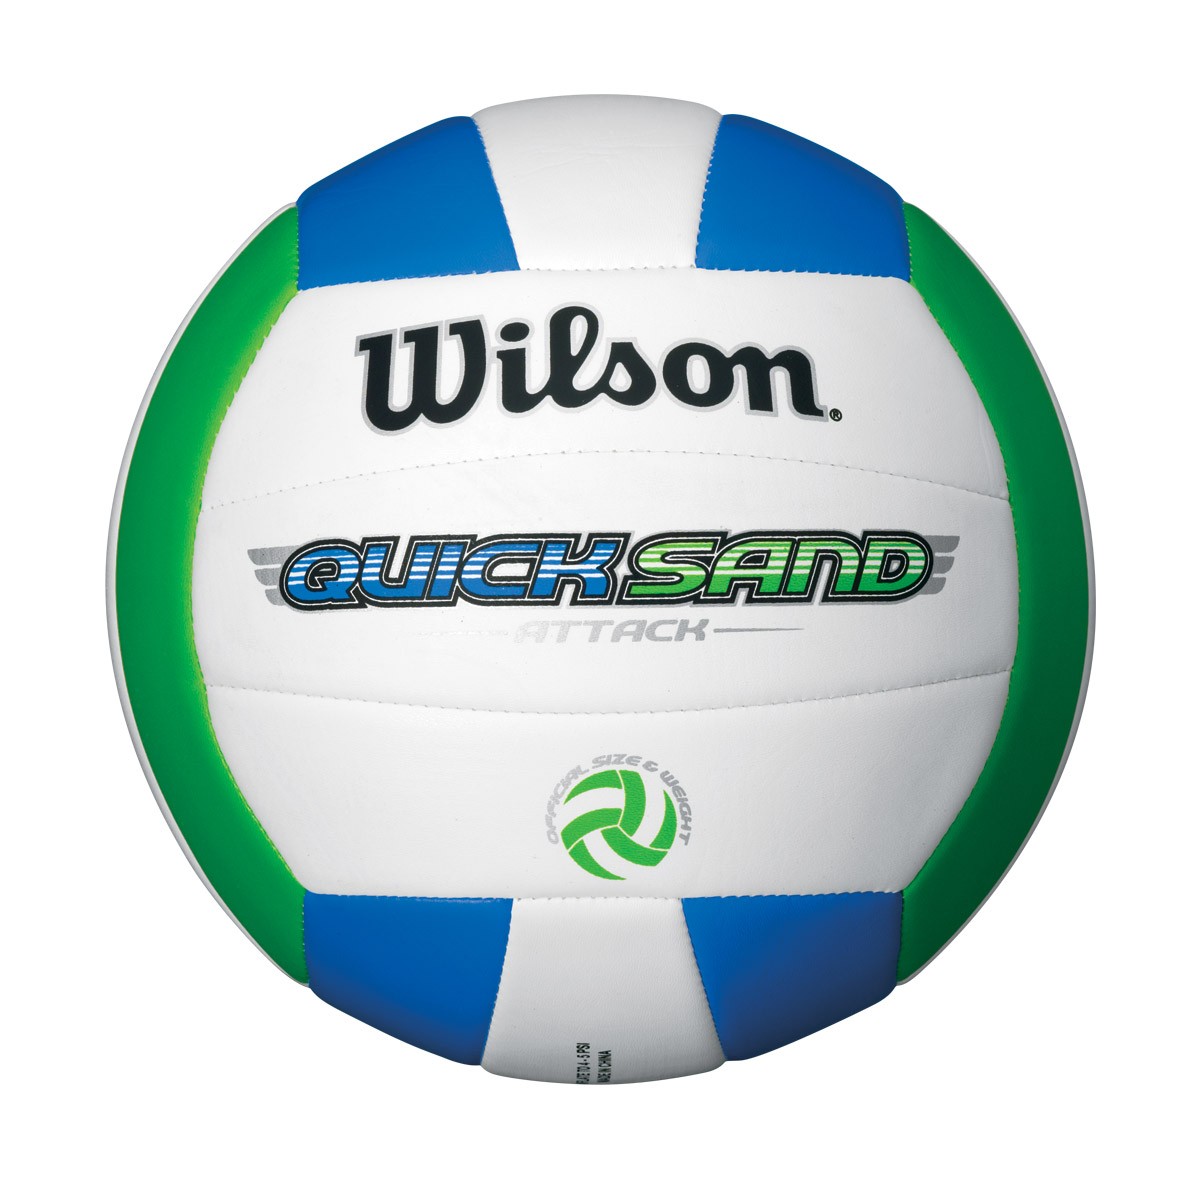 Volleyballs | Wilson Sporting Goods